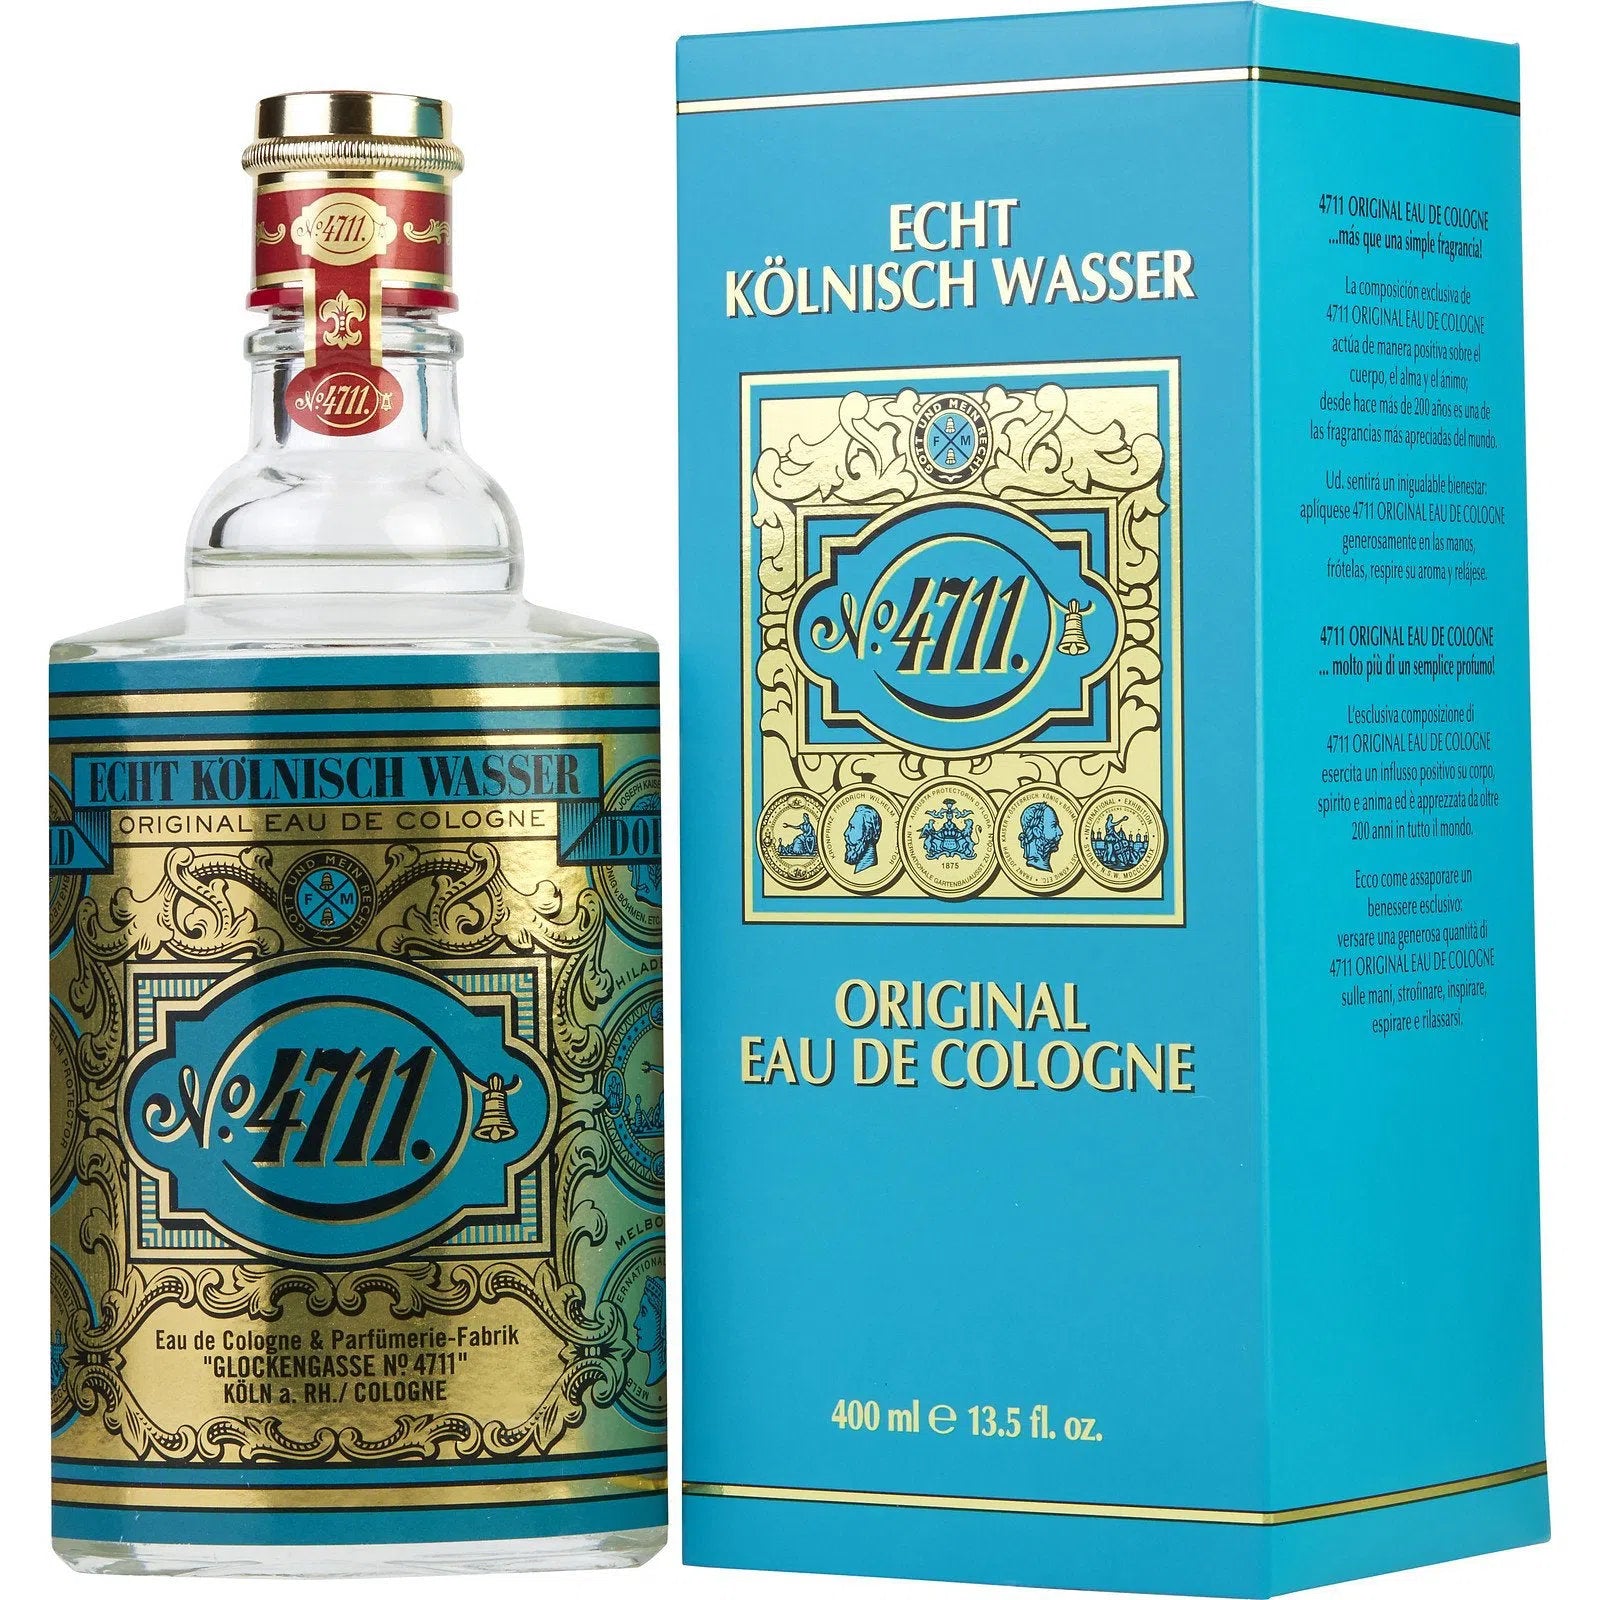 Perfume Echt Kölnisch Wasser No 4711 EDC (U) / 400 ml - 4011700740048- Prive Perfumes Honduras